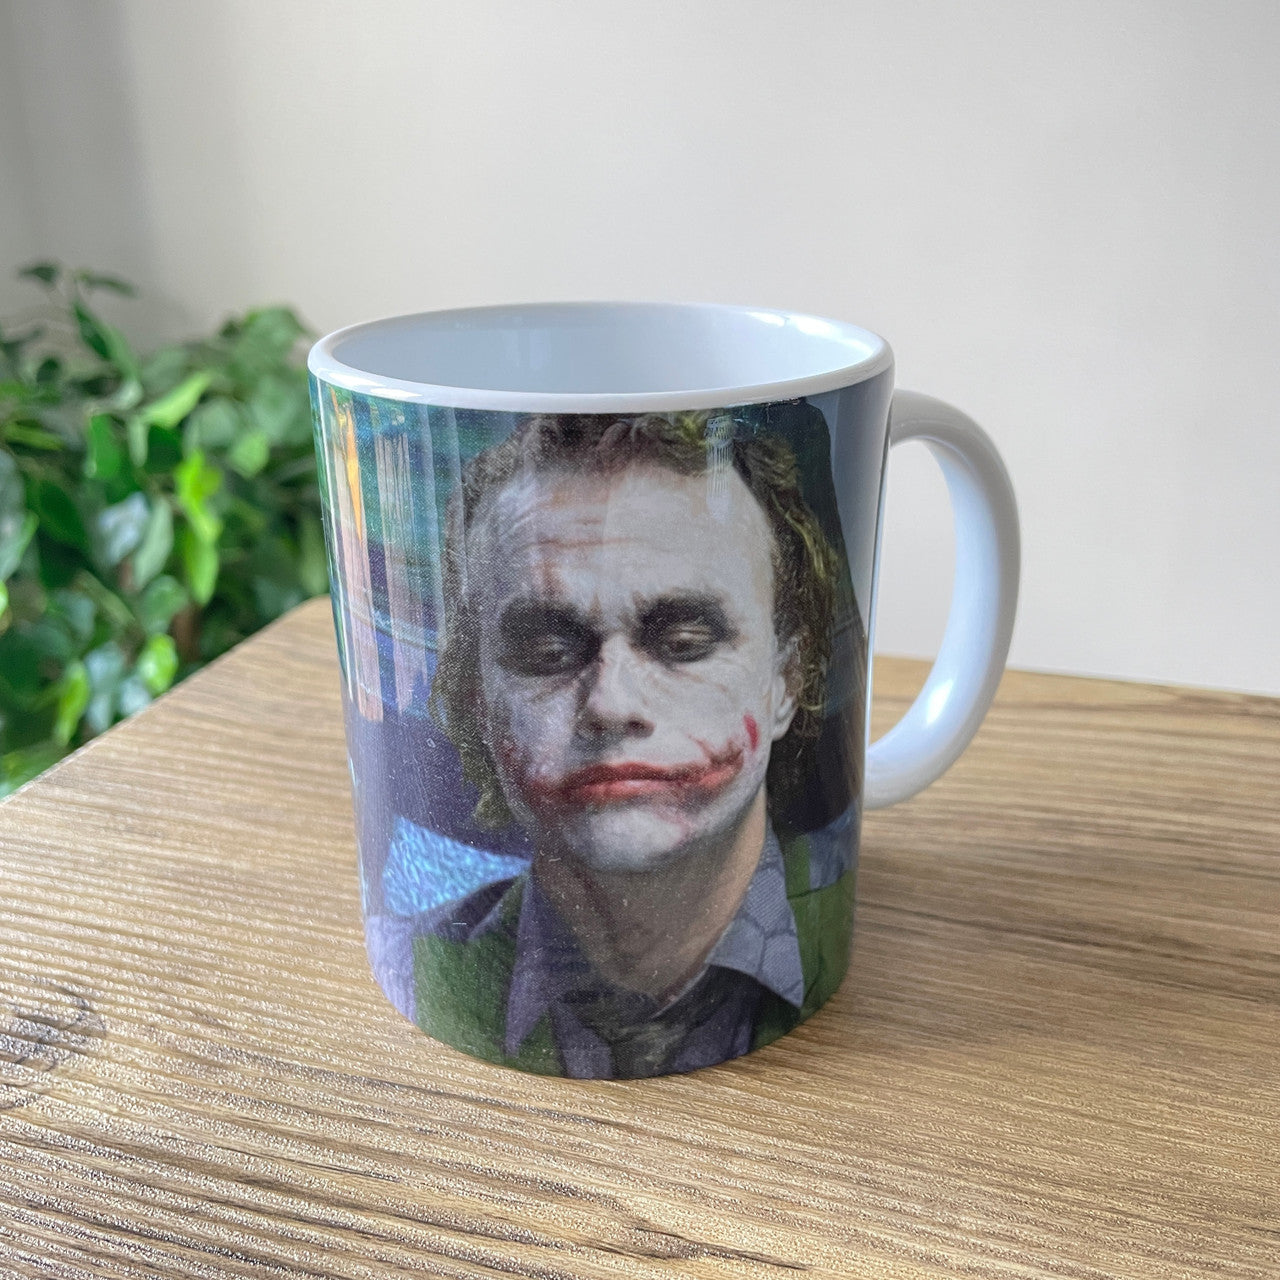 Beetlejuice & The Joker KiSS Mug - funny unique Gift Idea - Home, eye catching cool design - movies - Heath Ledger Michael Keaton Kitchen